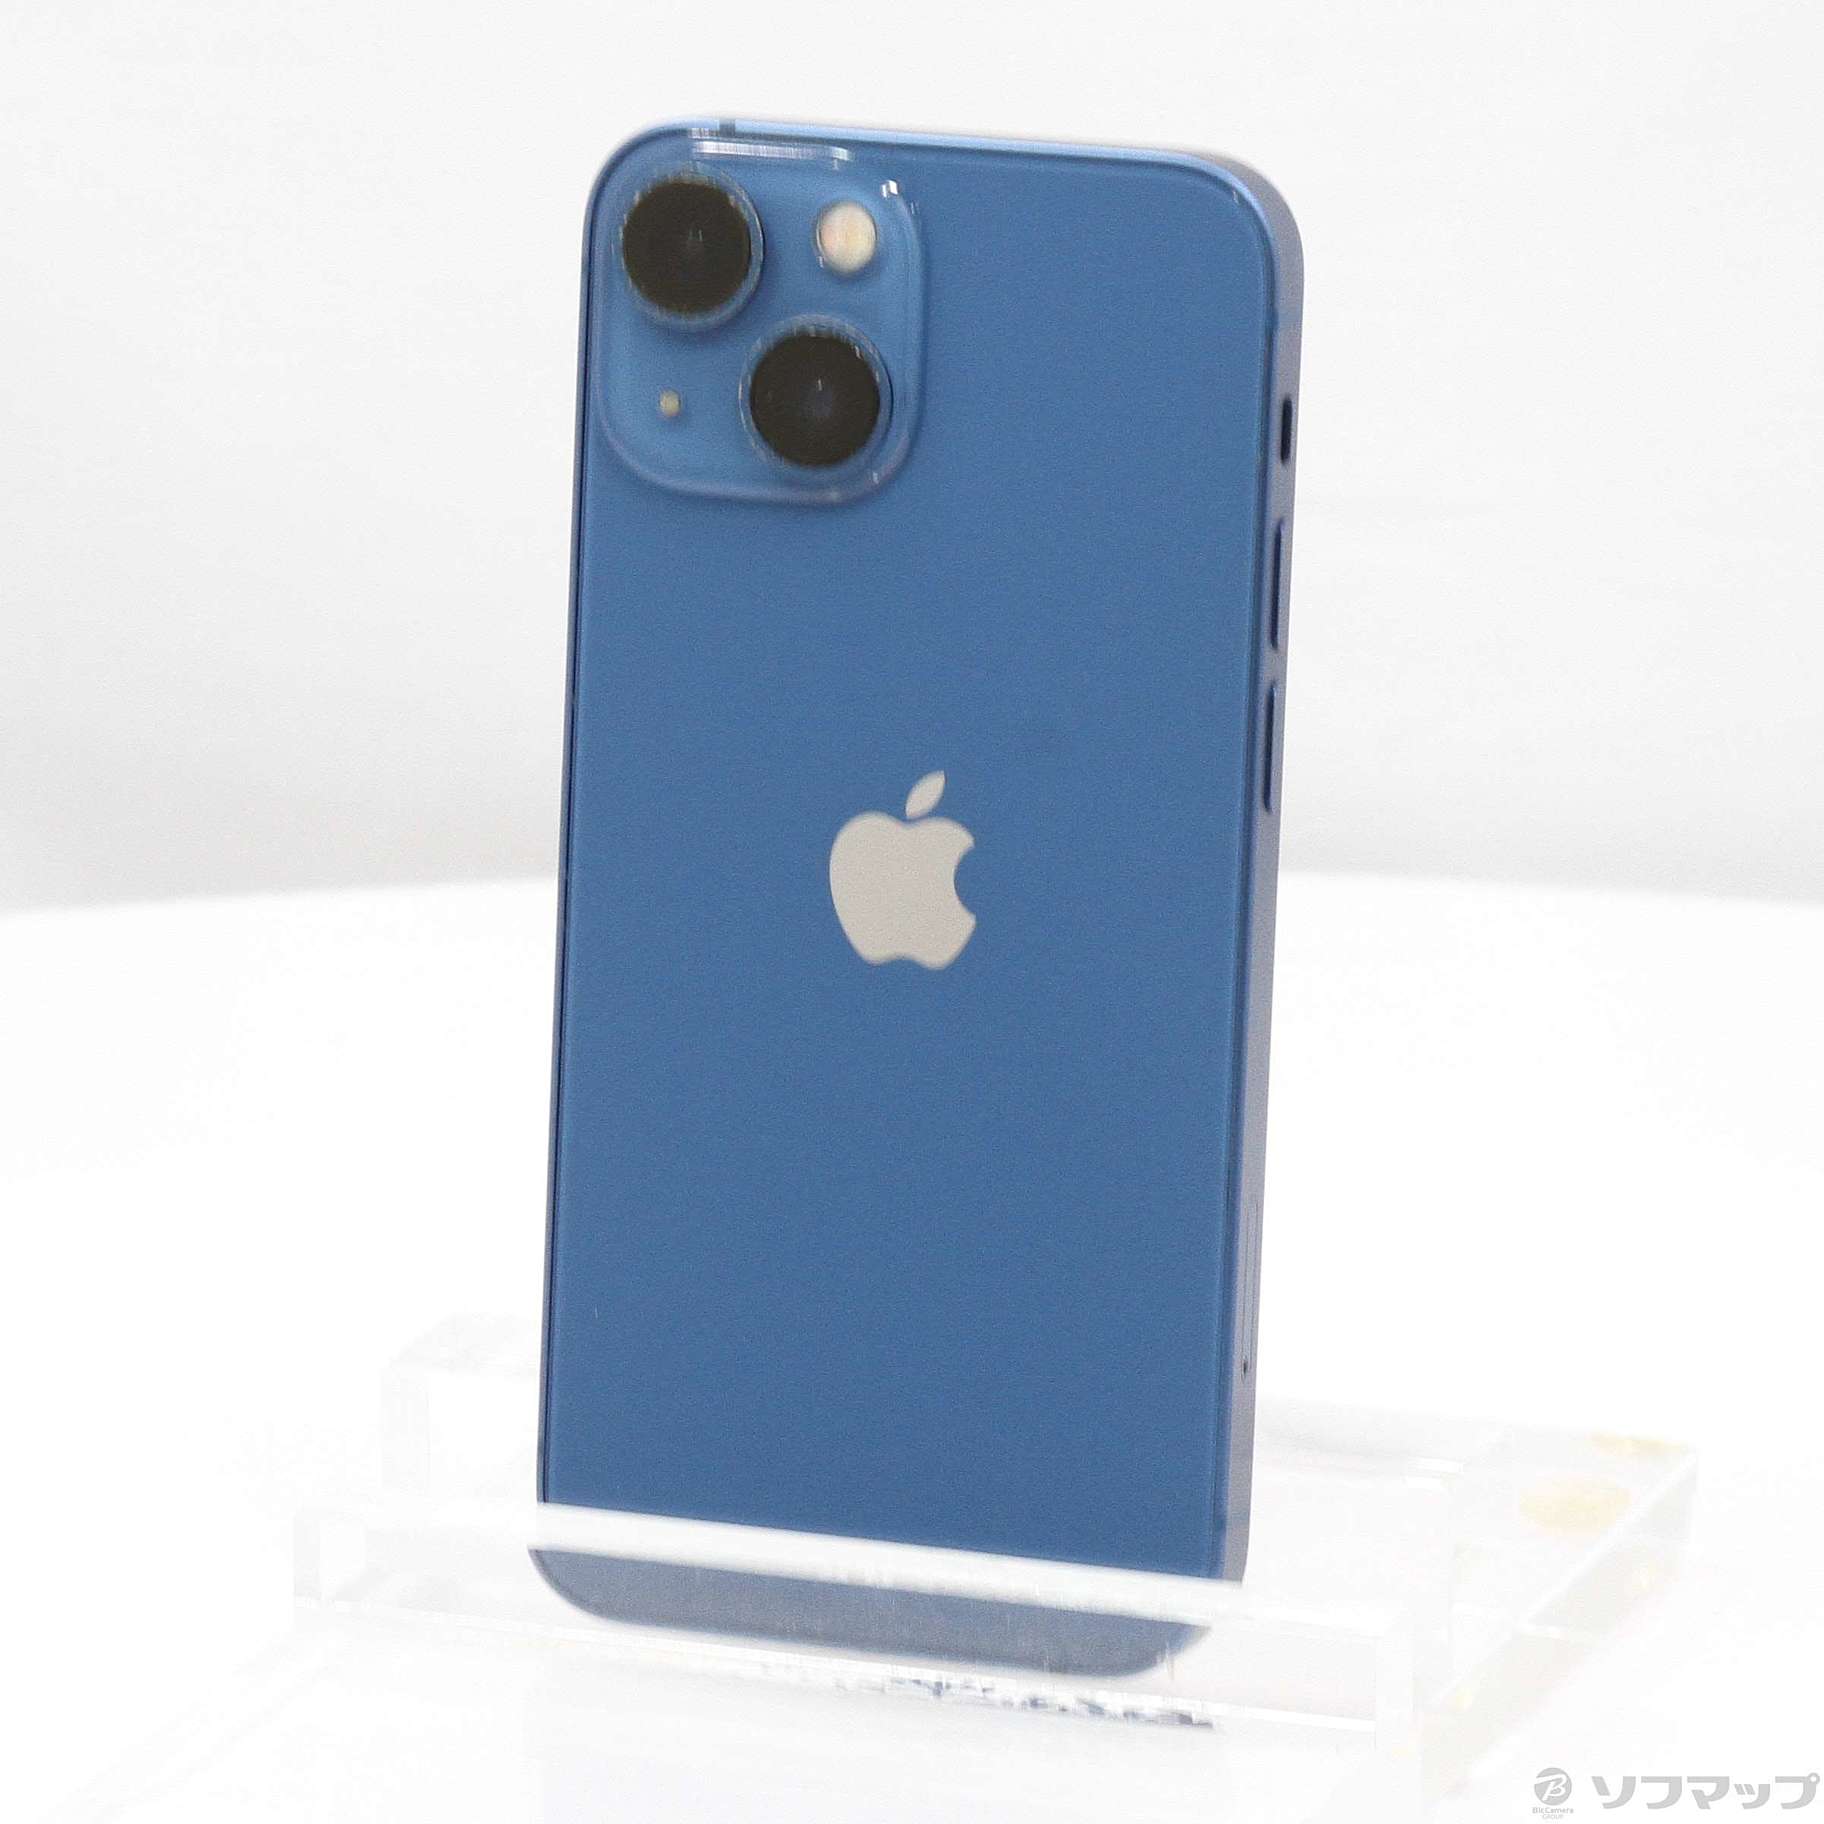 iPhone 13 mini ブルー 512GB　SIMフリー